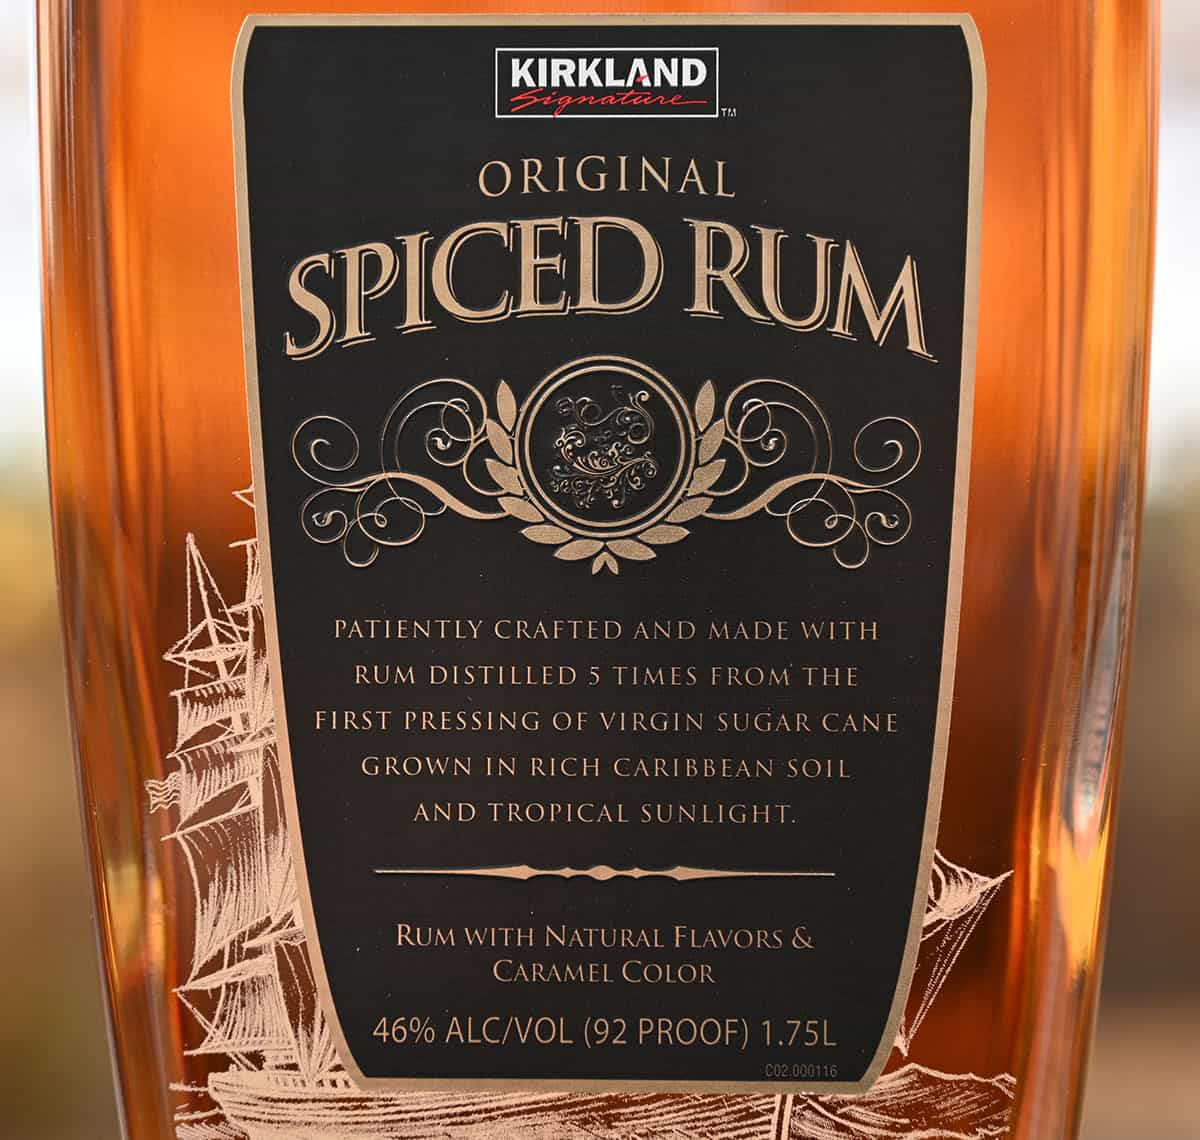 Closeup image of the Costco Kirkland Signature Original Spiced Rum label on the bottle.